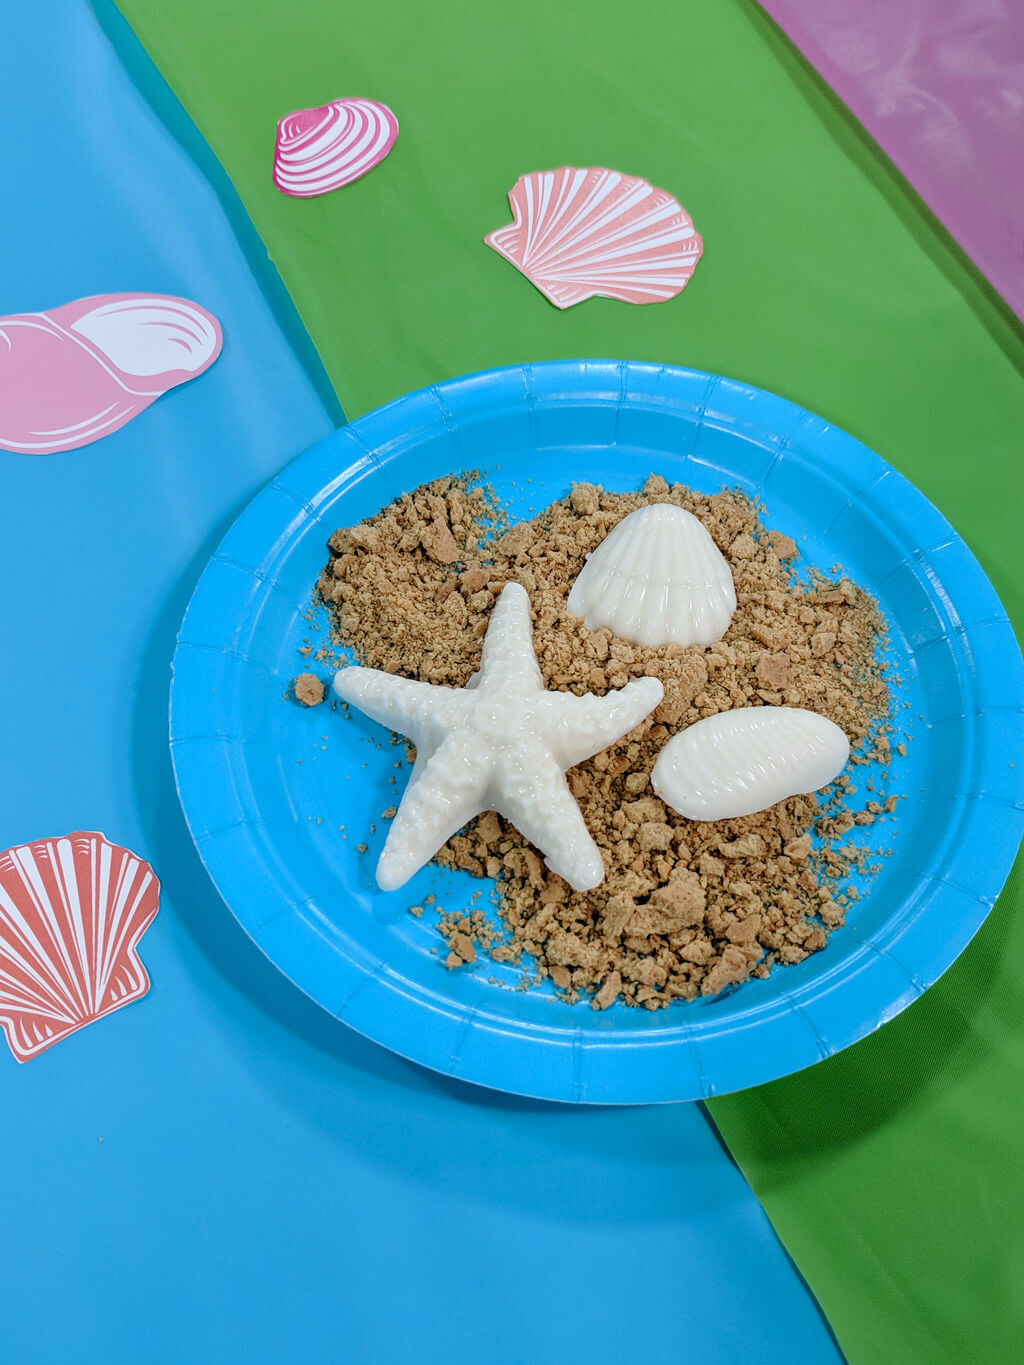 Chocolate shells with crushed graham cracker sand